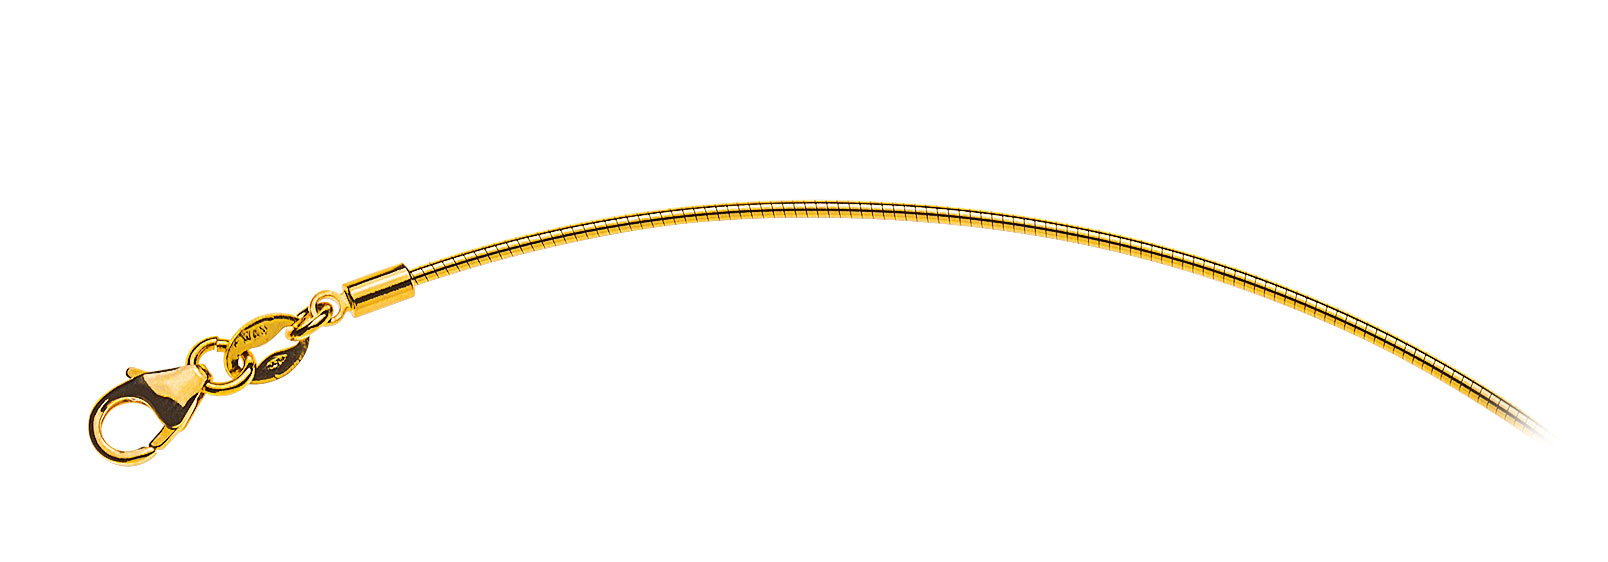 AURONOS Prestige Necklace yellow gold 18K omega chain 42cm 1.0mm